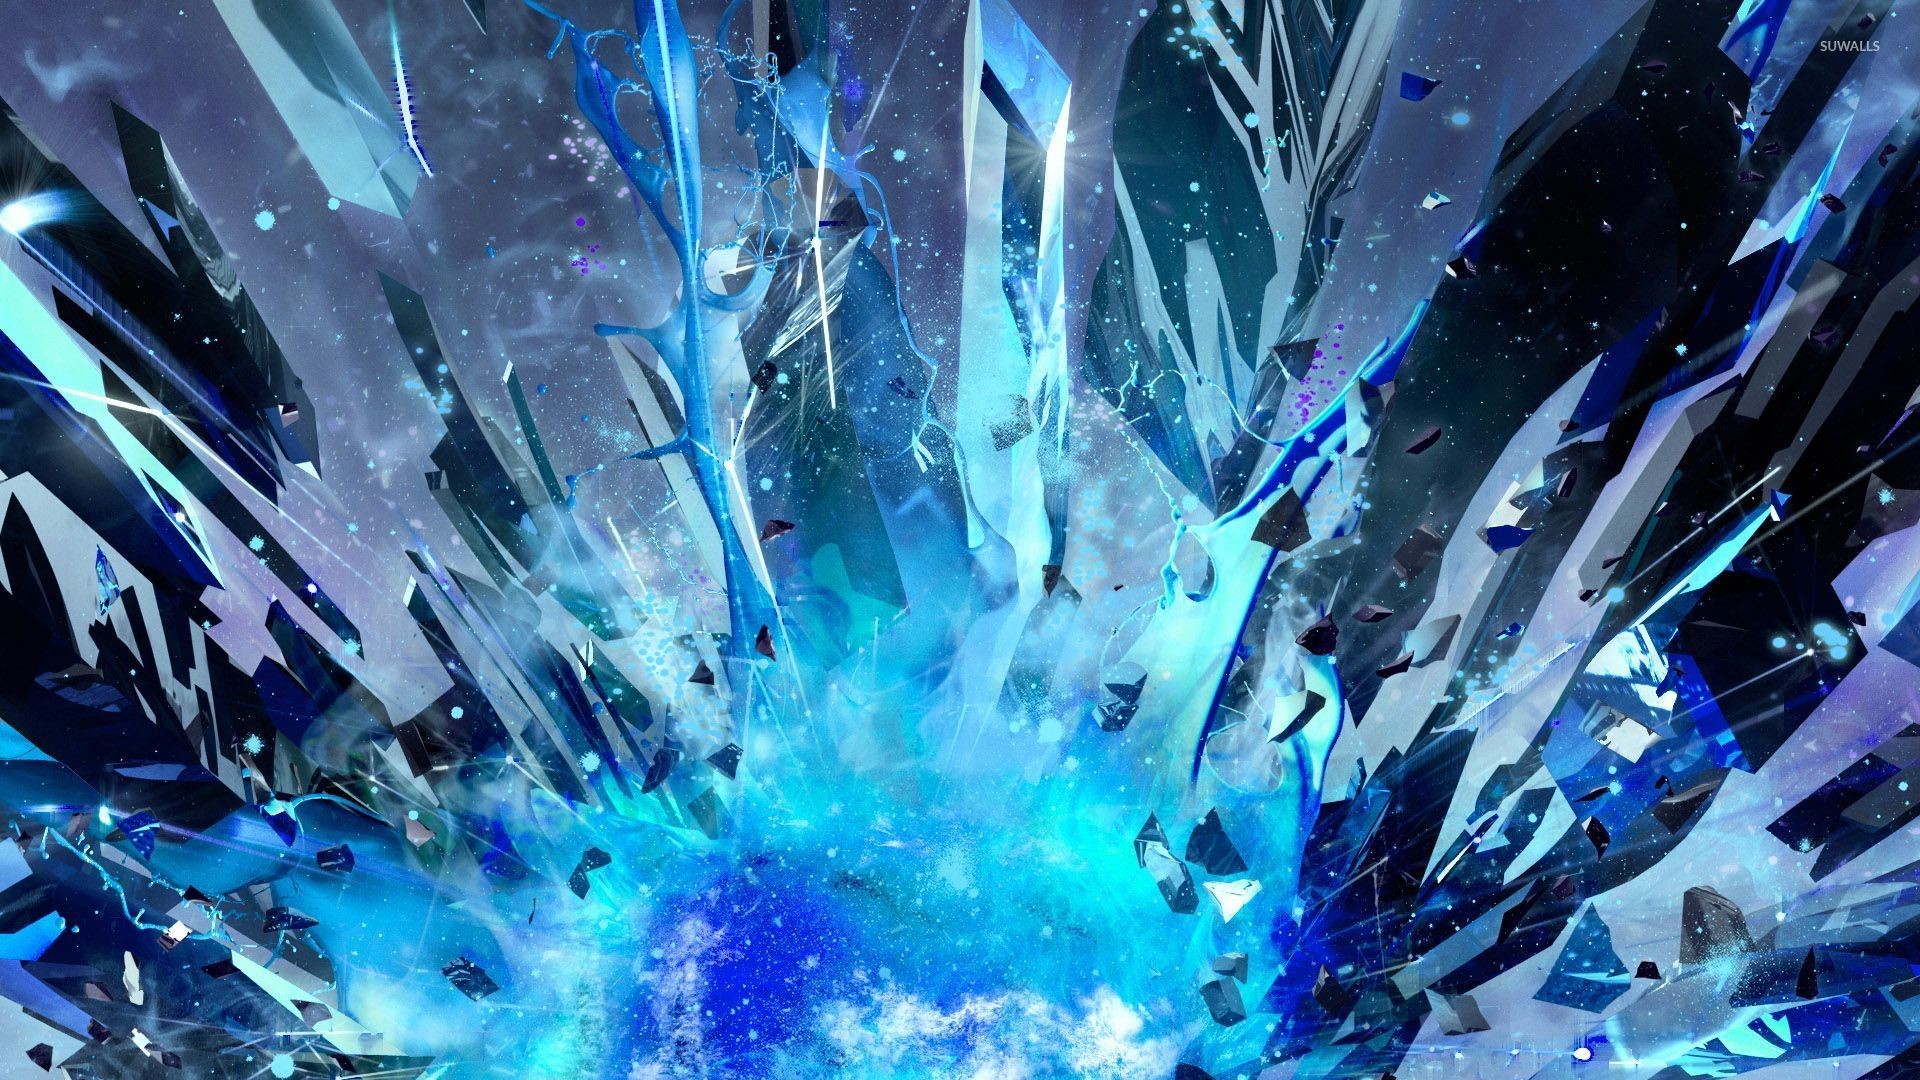 1920x1080 Blue crystal explosion wallpaper